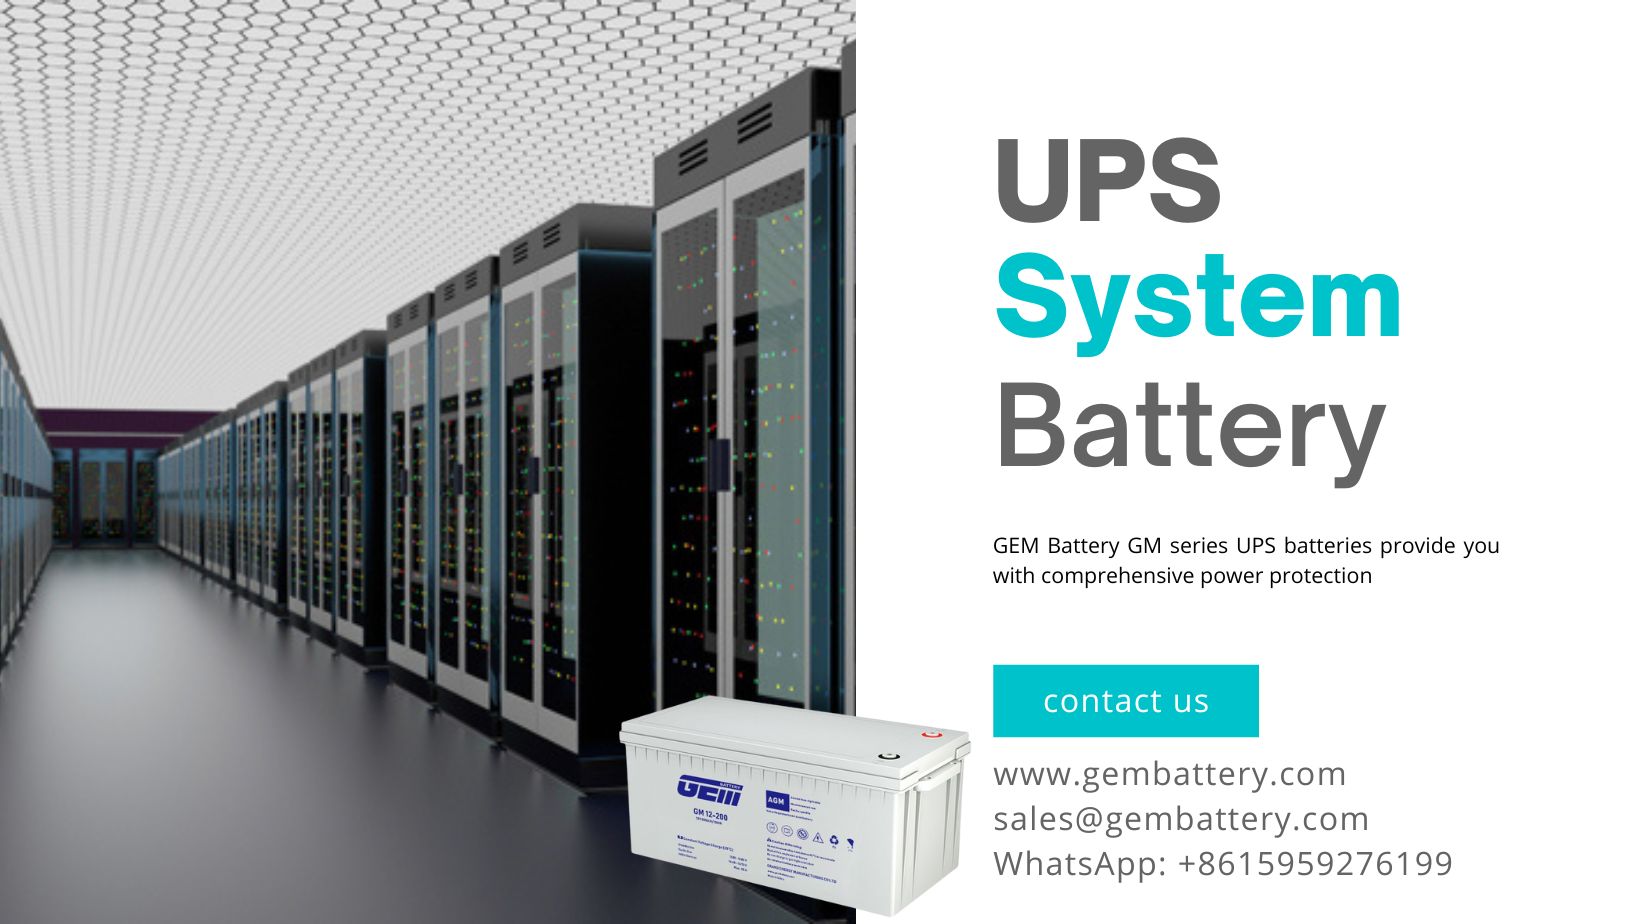 UPS battery